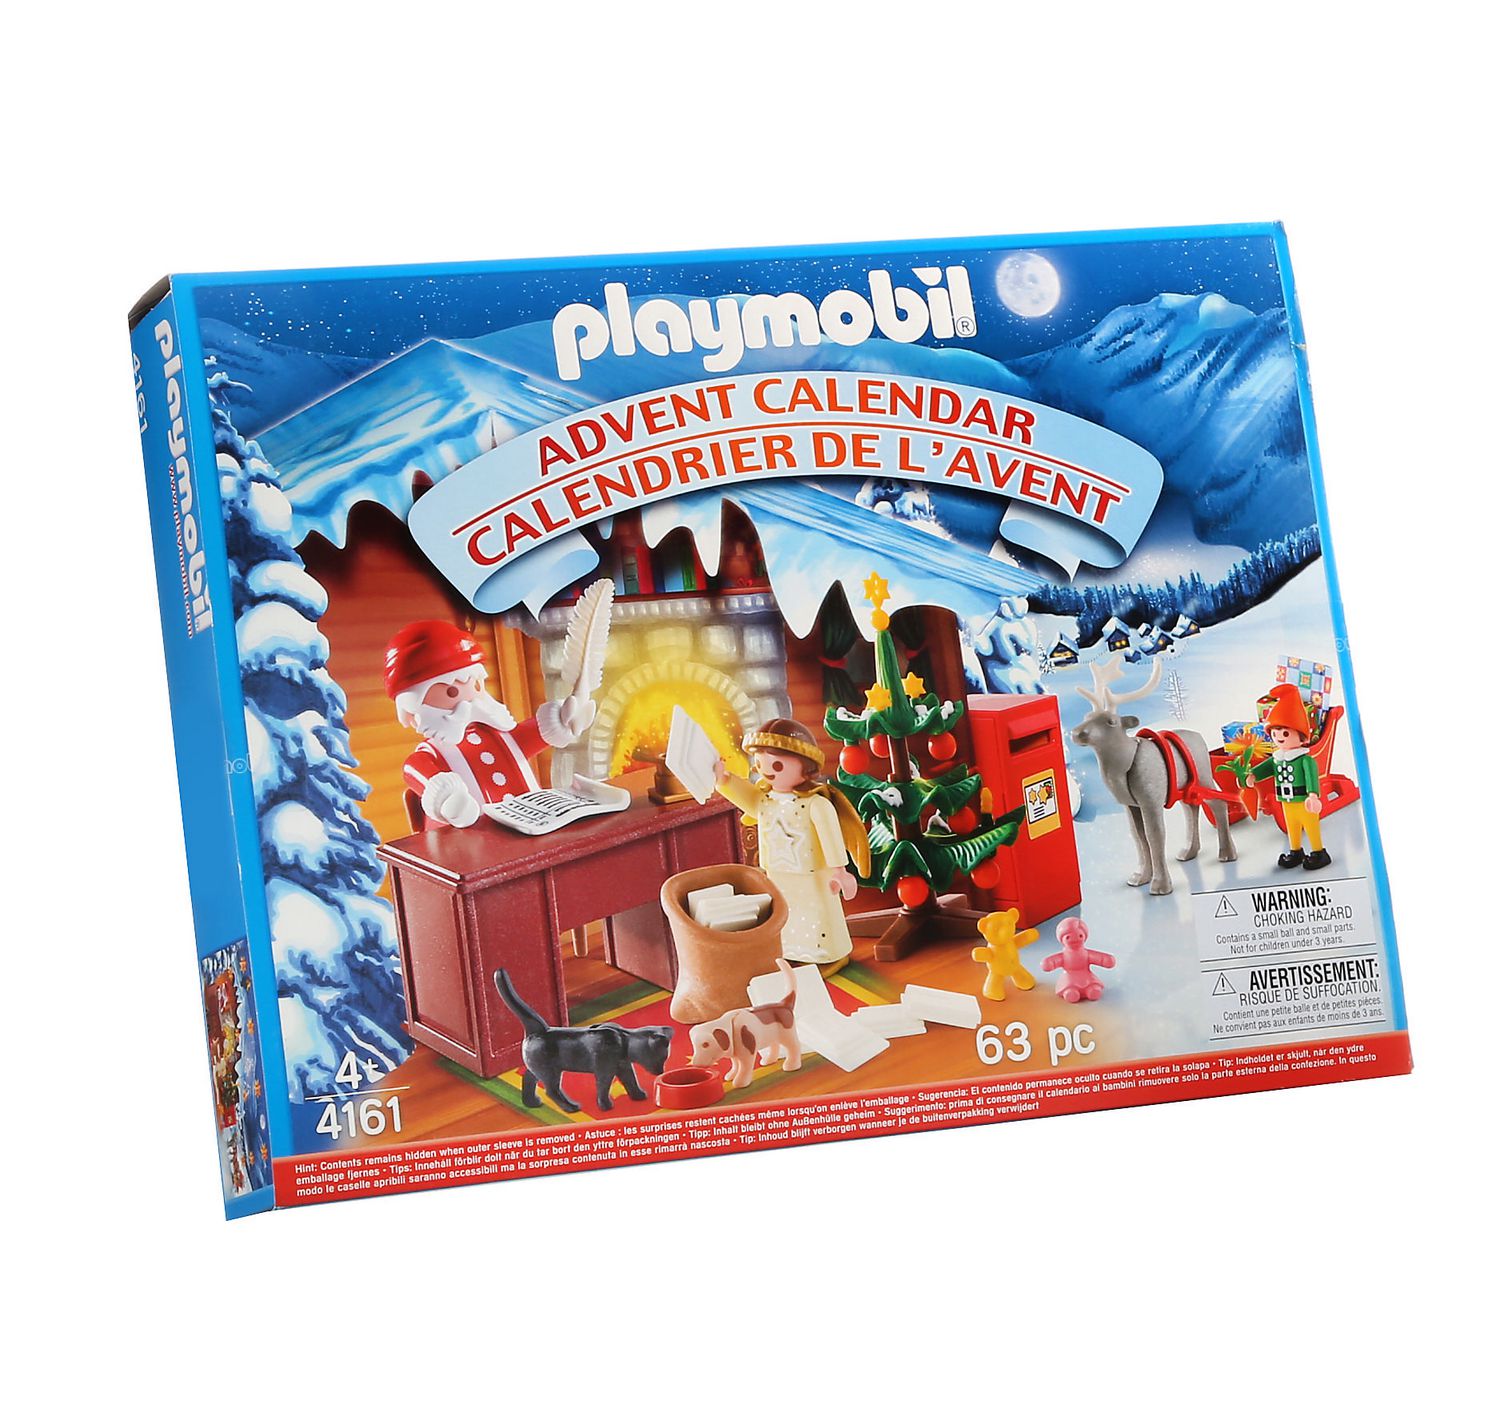 Playmobil Advent Calendar 4161 Set | Walmart